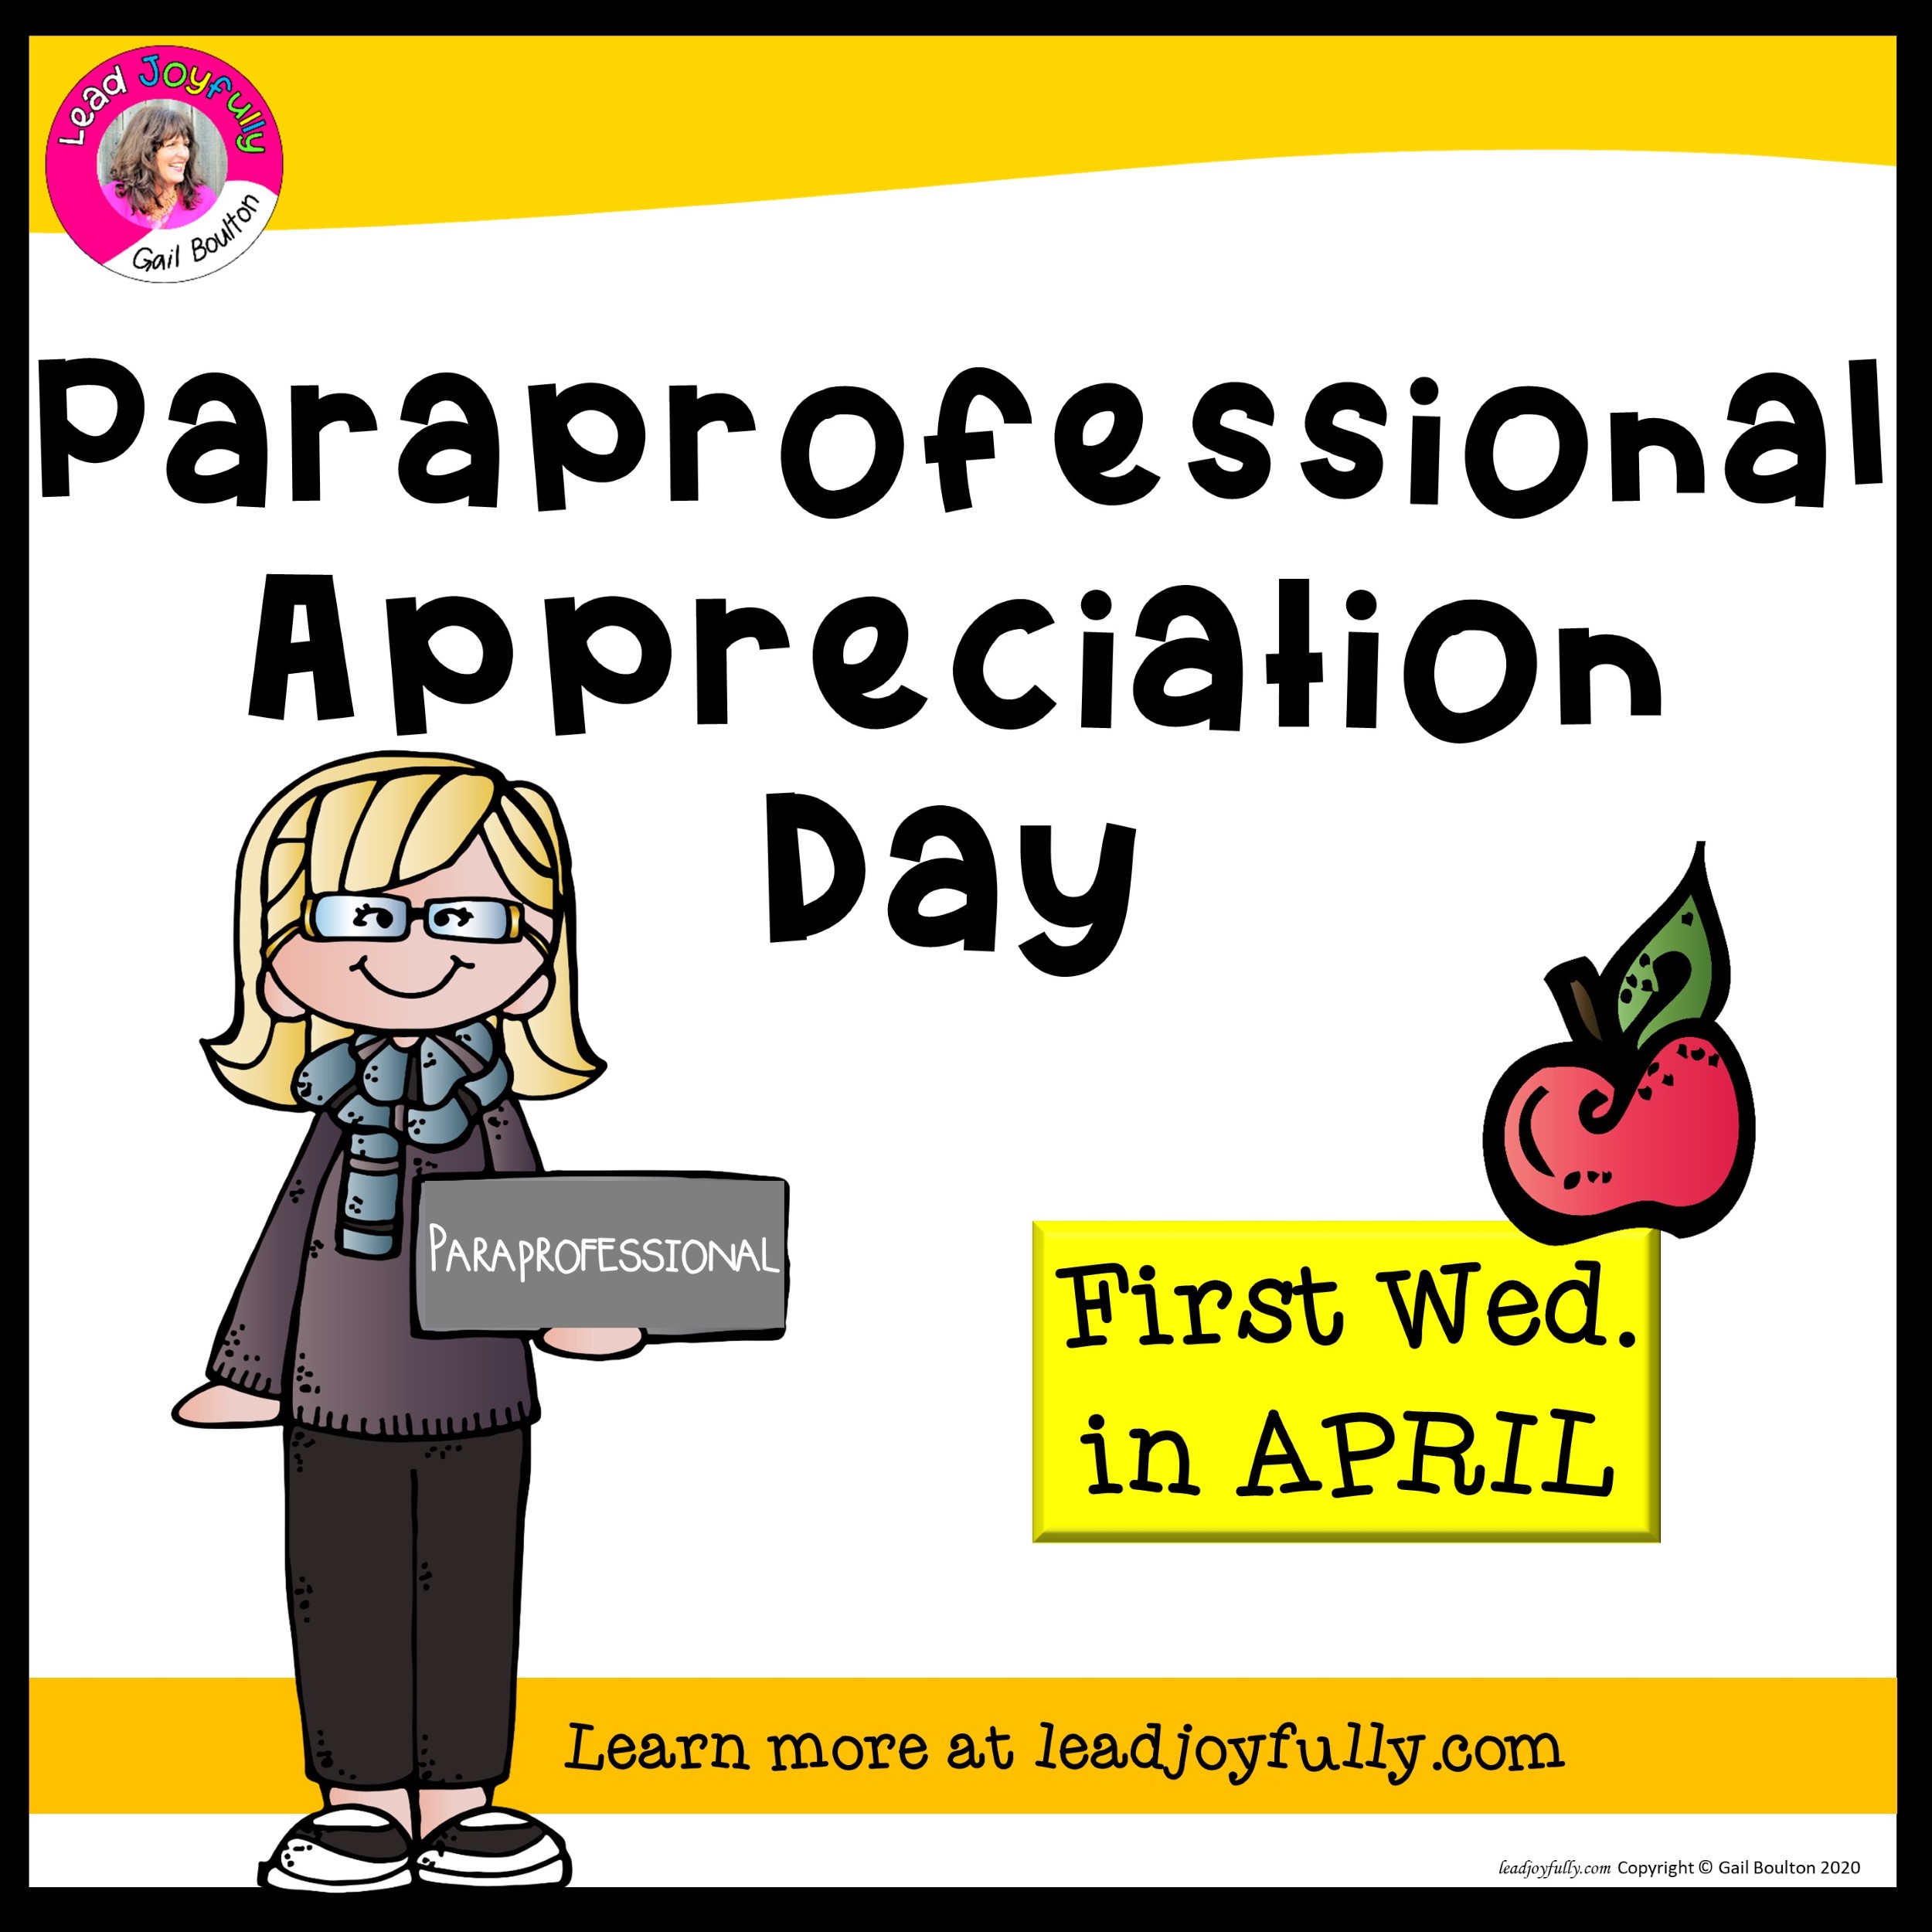 Paraprofessional Appreciation Day April 2nd Lead Joyfully